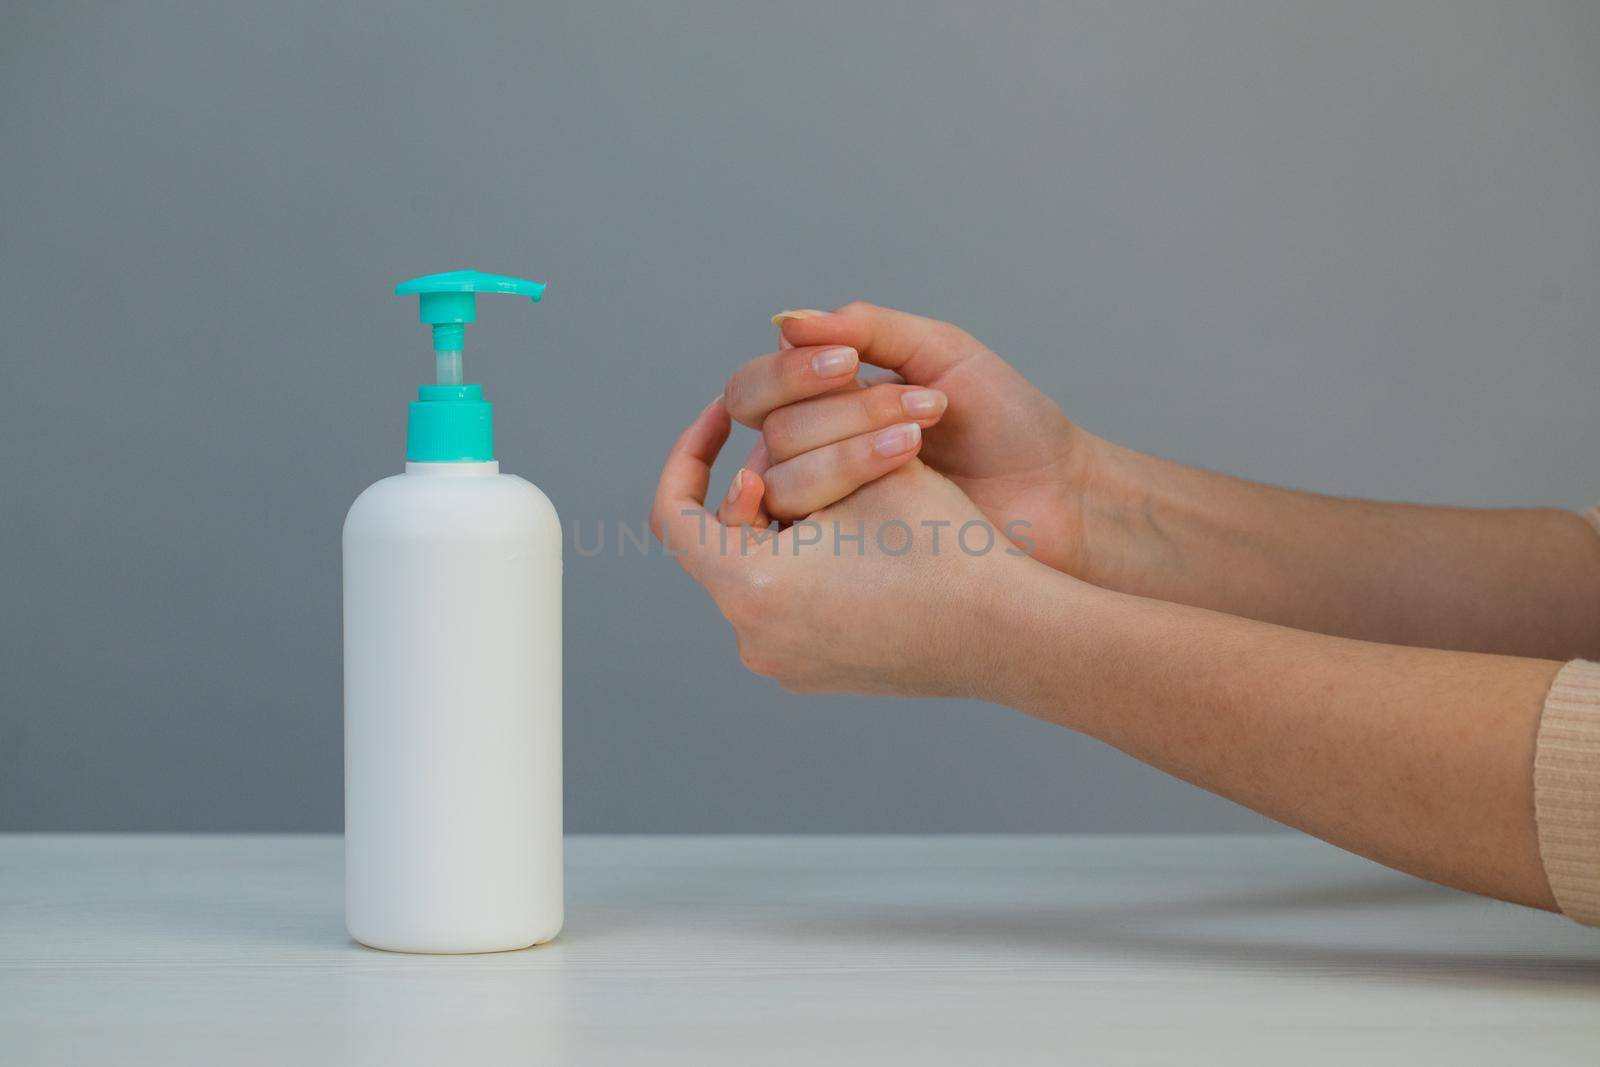 Coronavirus Hand Sanitizer Sanitiser Gel for Clean Hands Hygiene Corona Virus Spread Prevention. Woman Using Alcohol Rub Alternative to Washing Hands. by uflypro